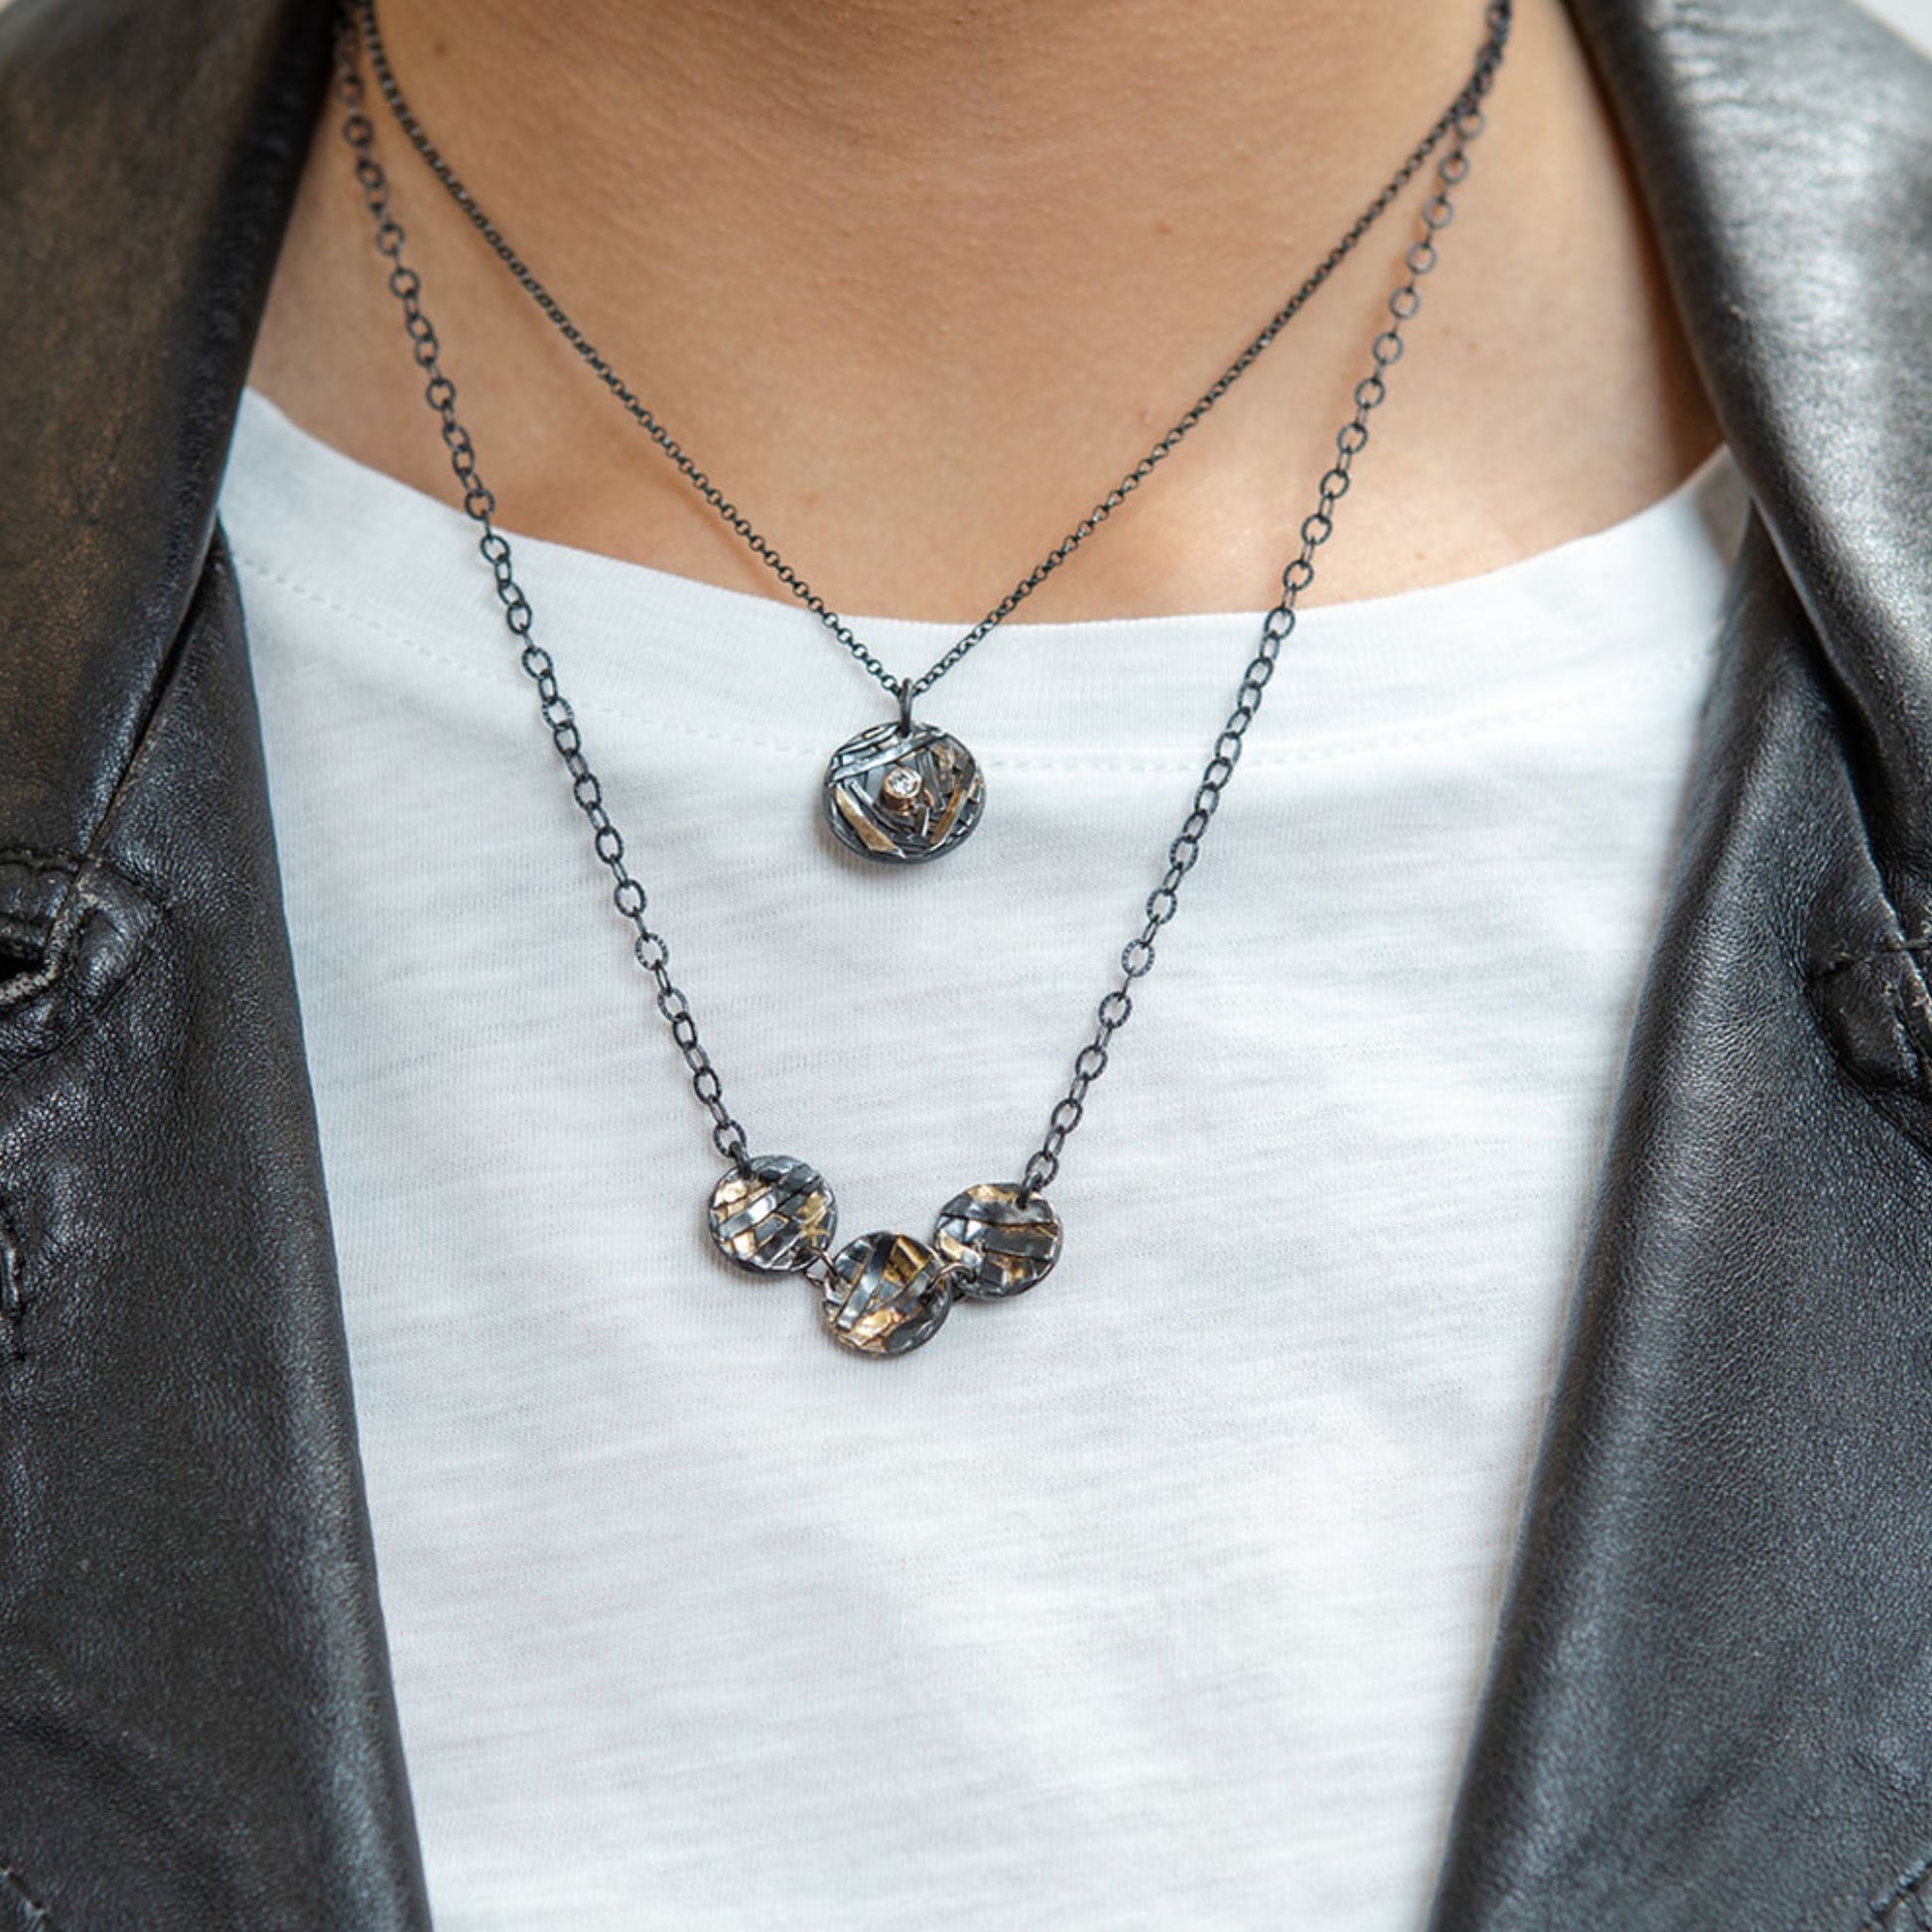 Diamond coin necklace closeup on model